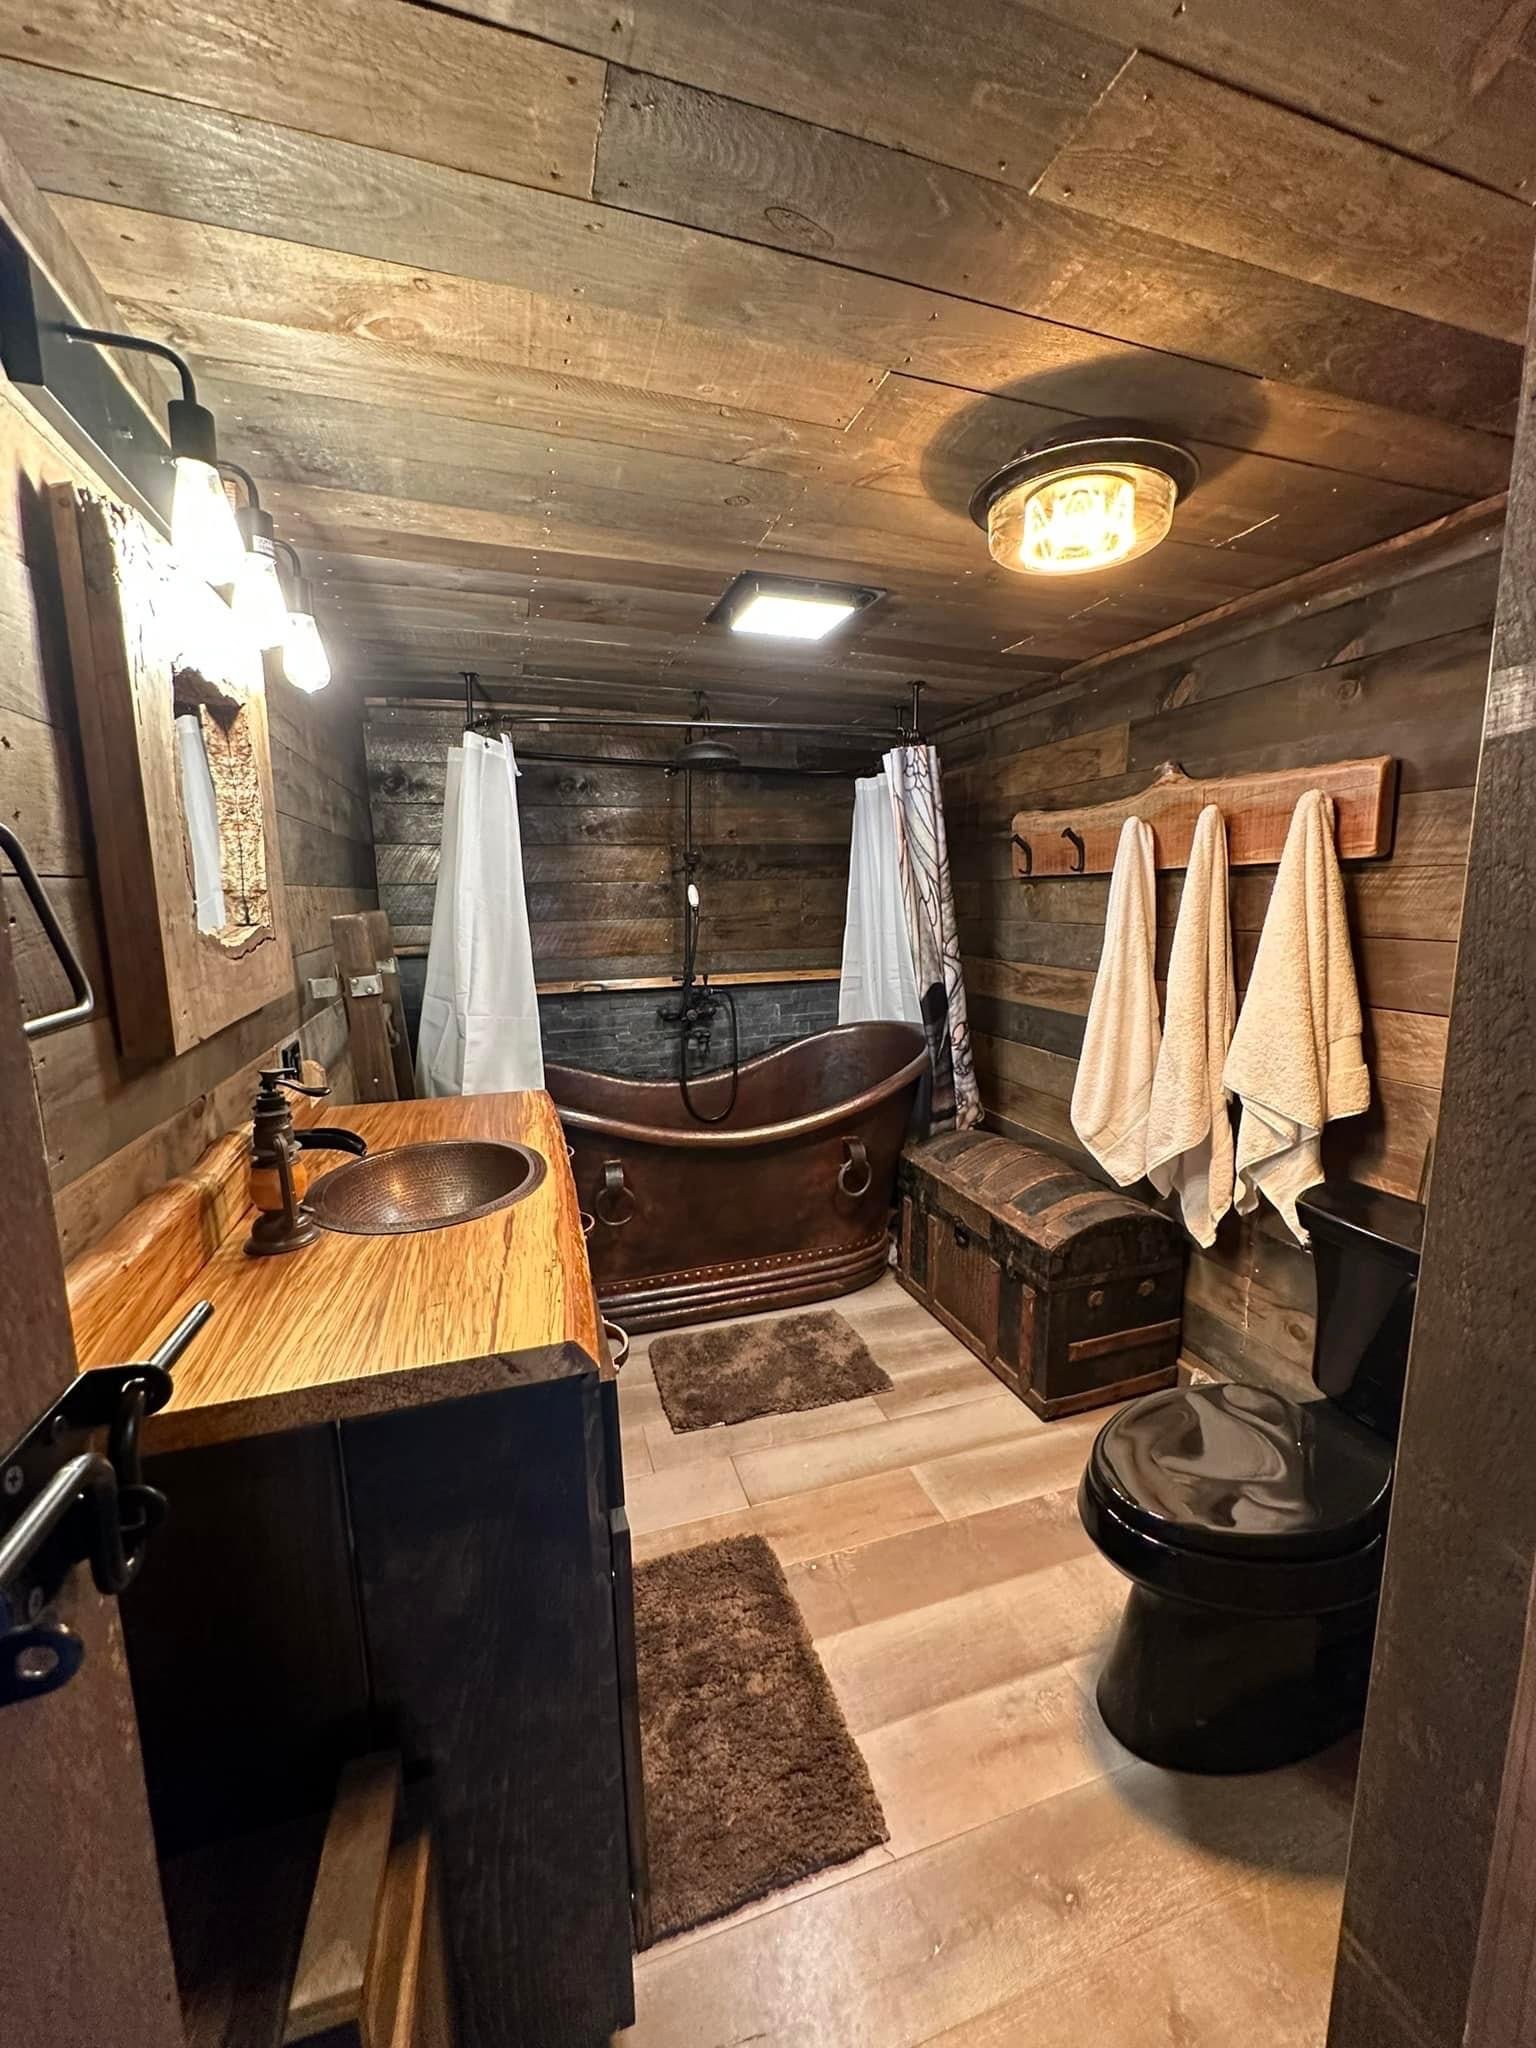 Magical Mountain Resorts Caretaker's Cabin Bathroom 2.JPG